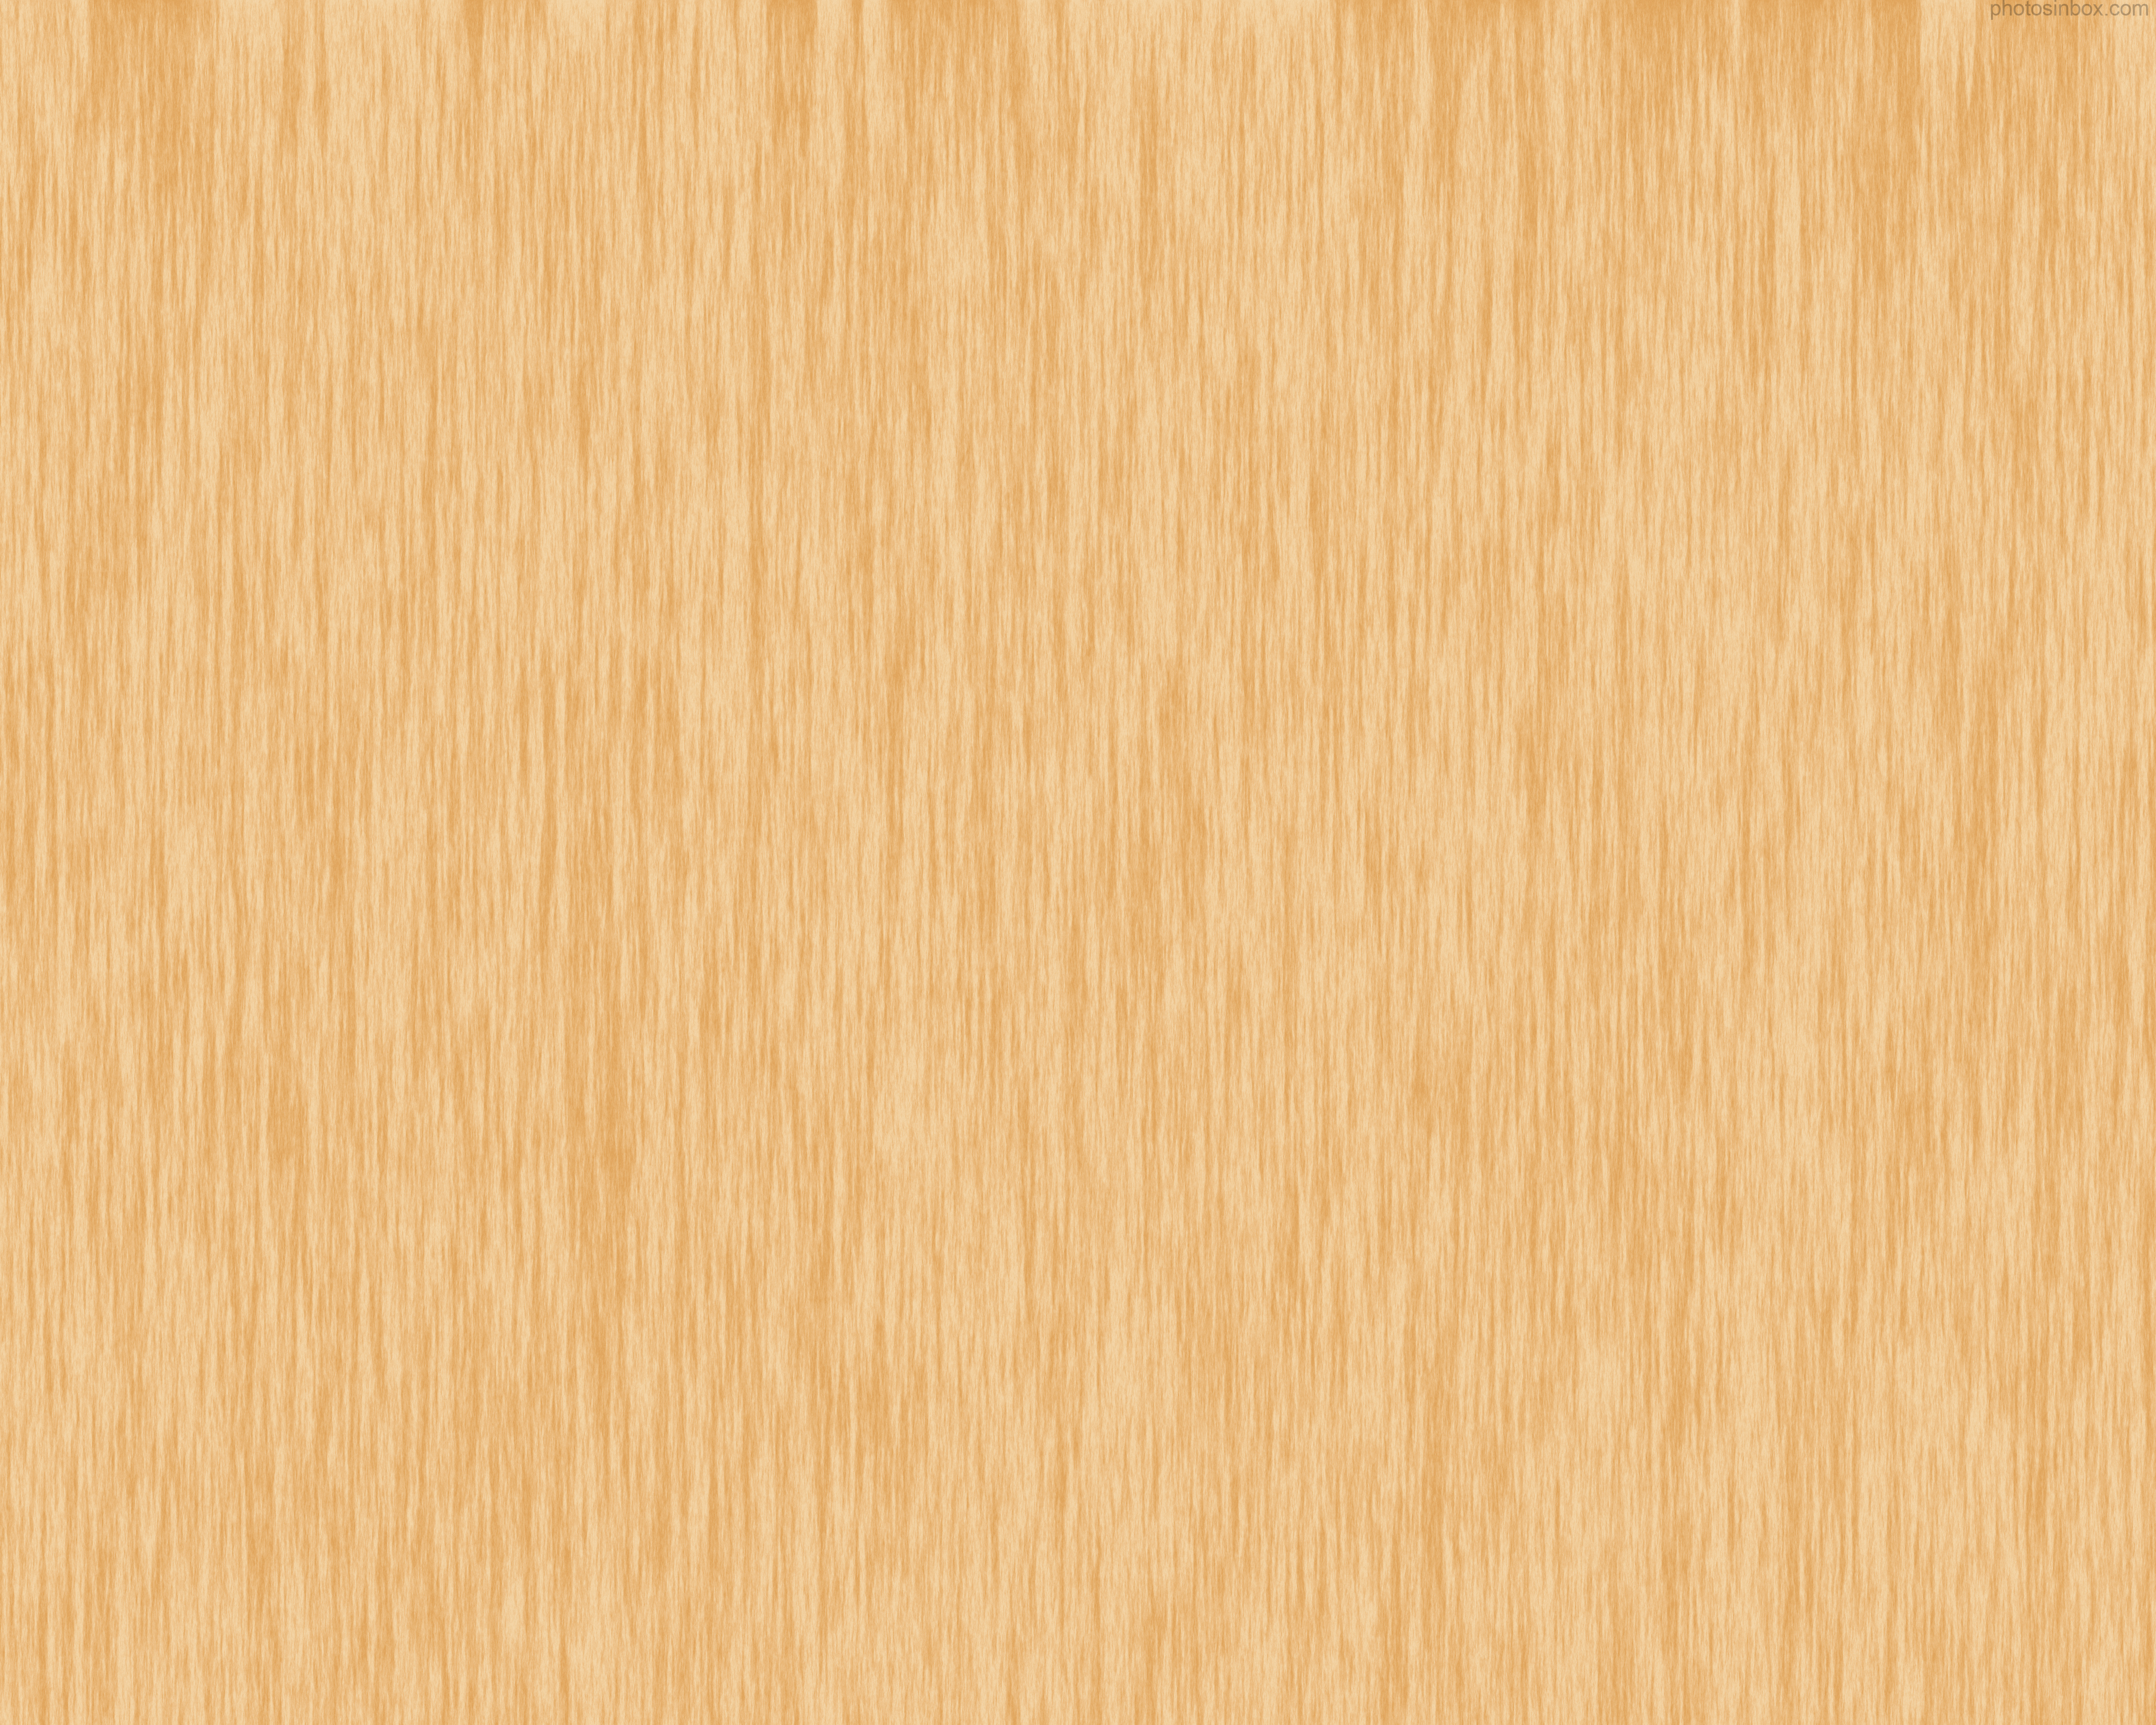 Maple Wood Texture Walpaper Frame